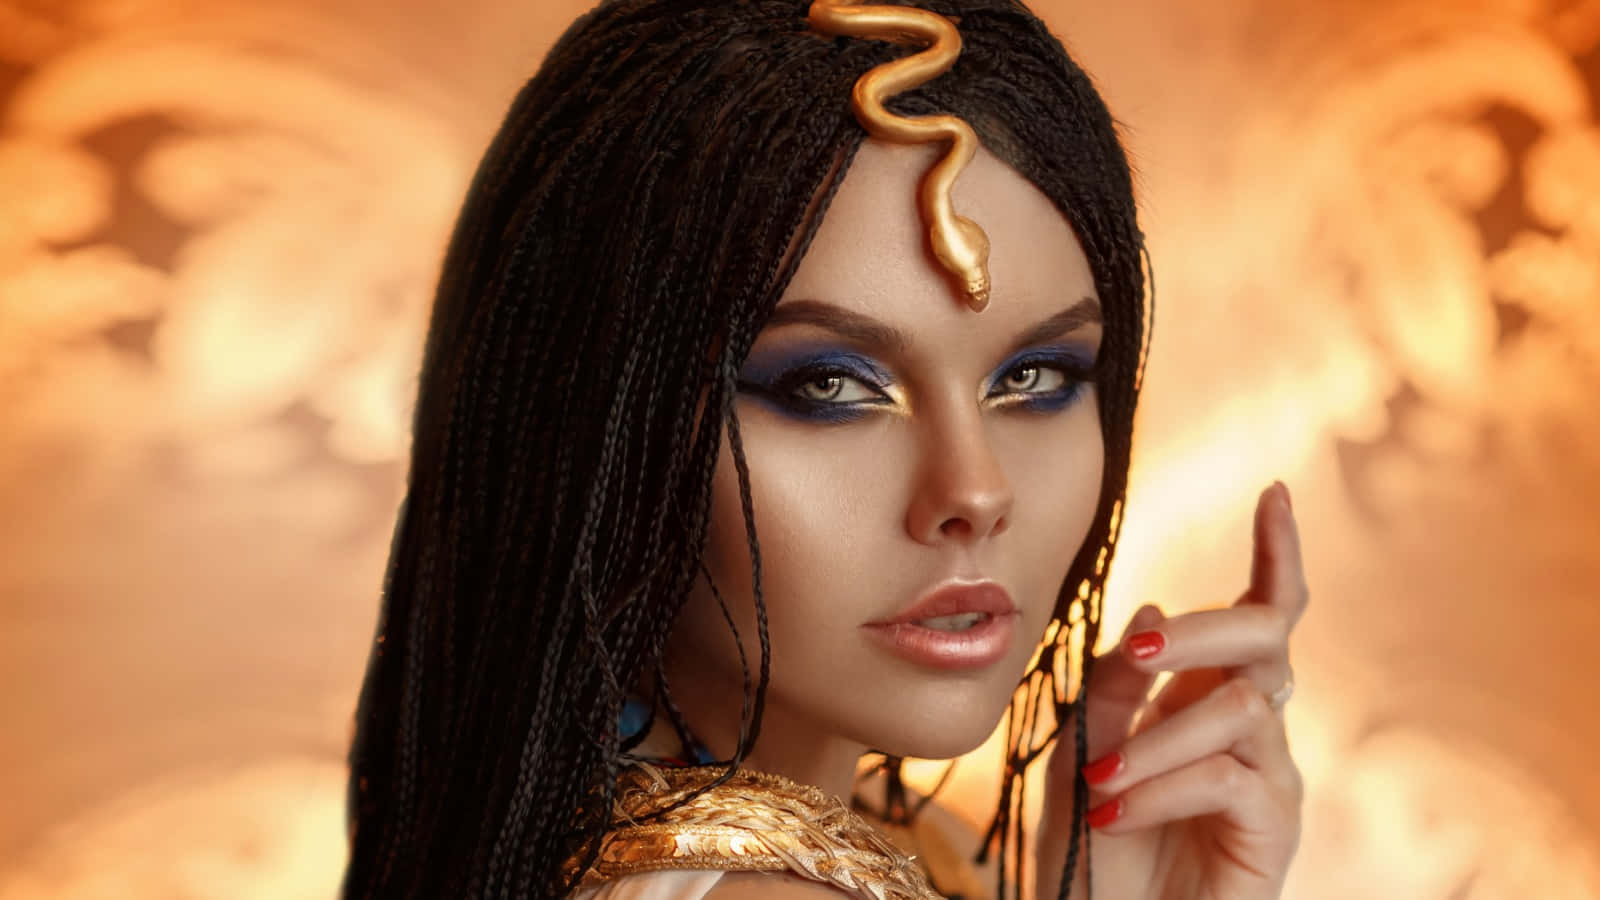 Densidste Farao I Egypten, Cleopatra.